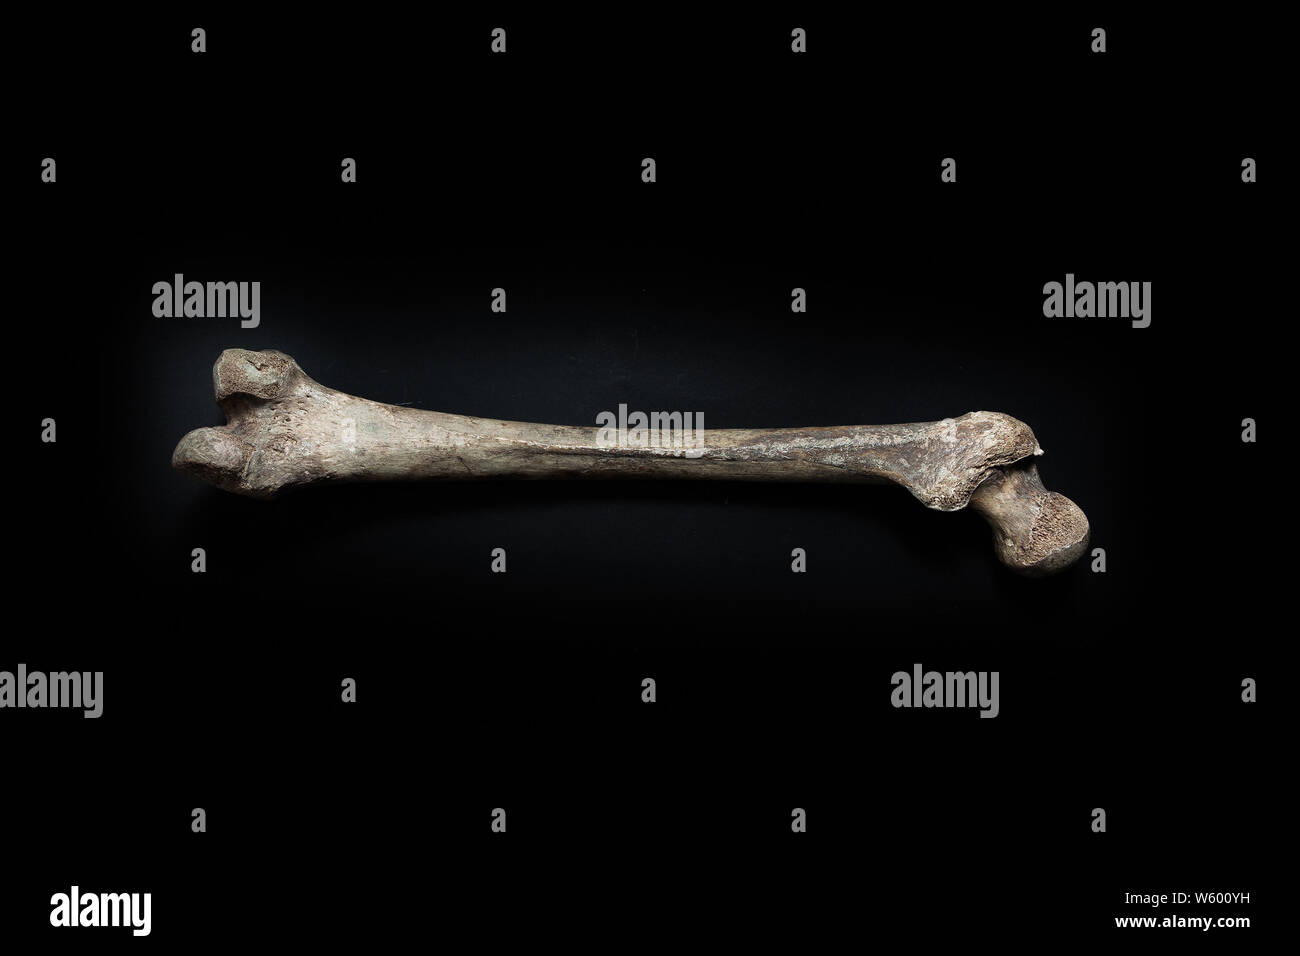 https://c8.alamy.com/comp/W600YH/femur-human-bone-close-up-isolated-on-black-background-W600YH.jpg